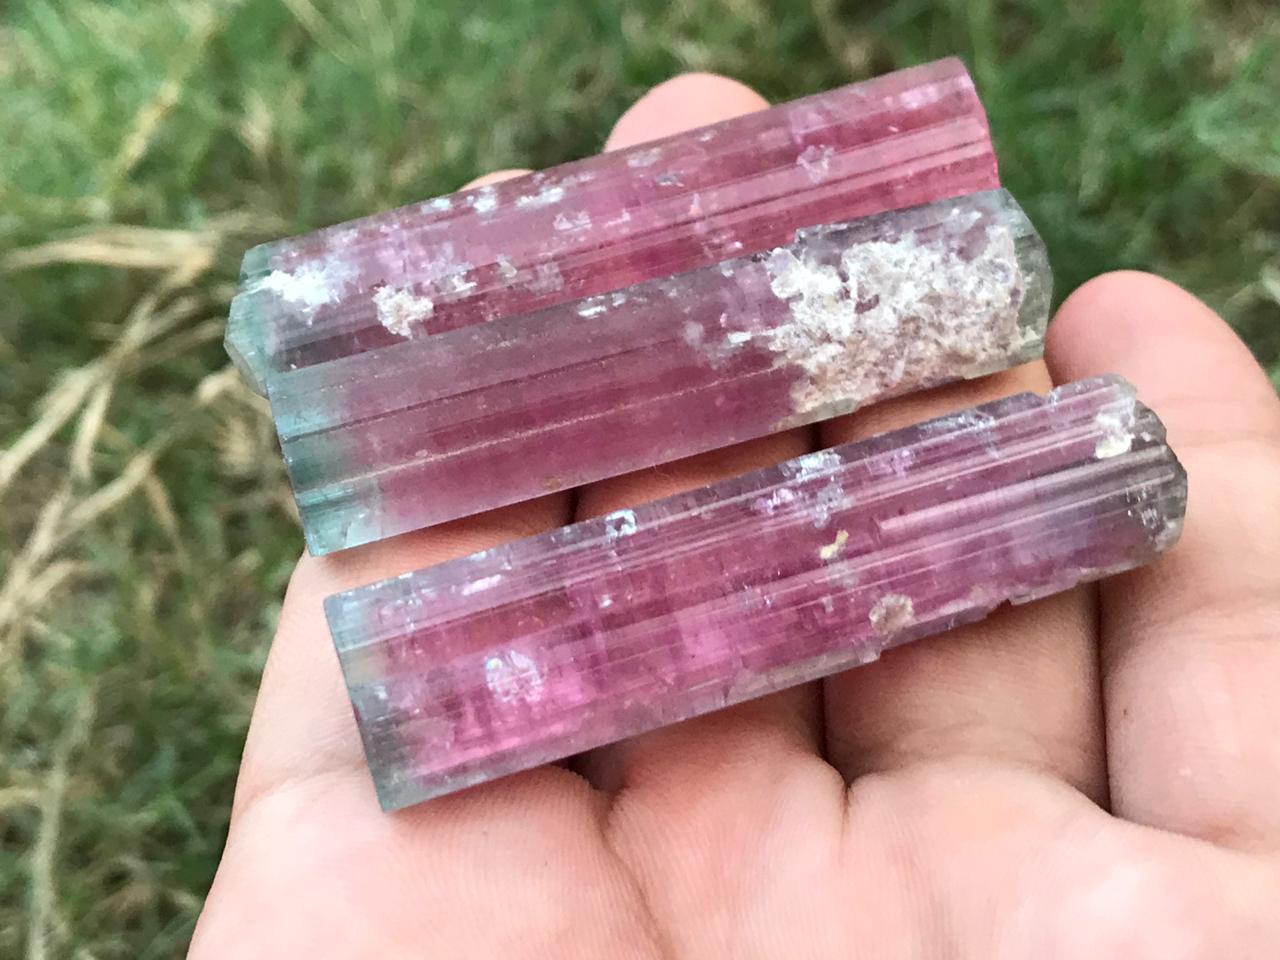 Blue cap DT pink tourmaline crystals from Kunar